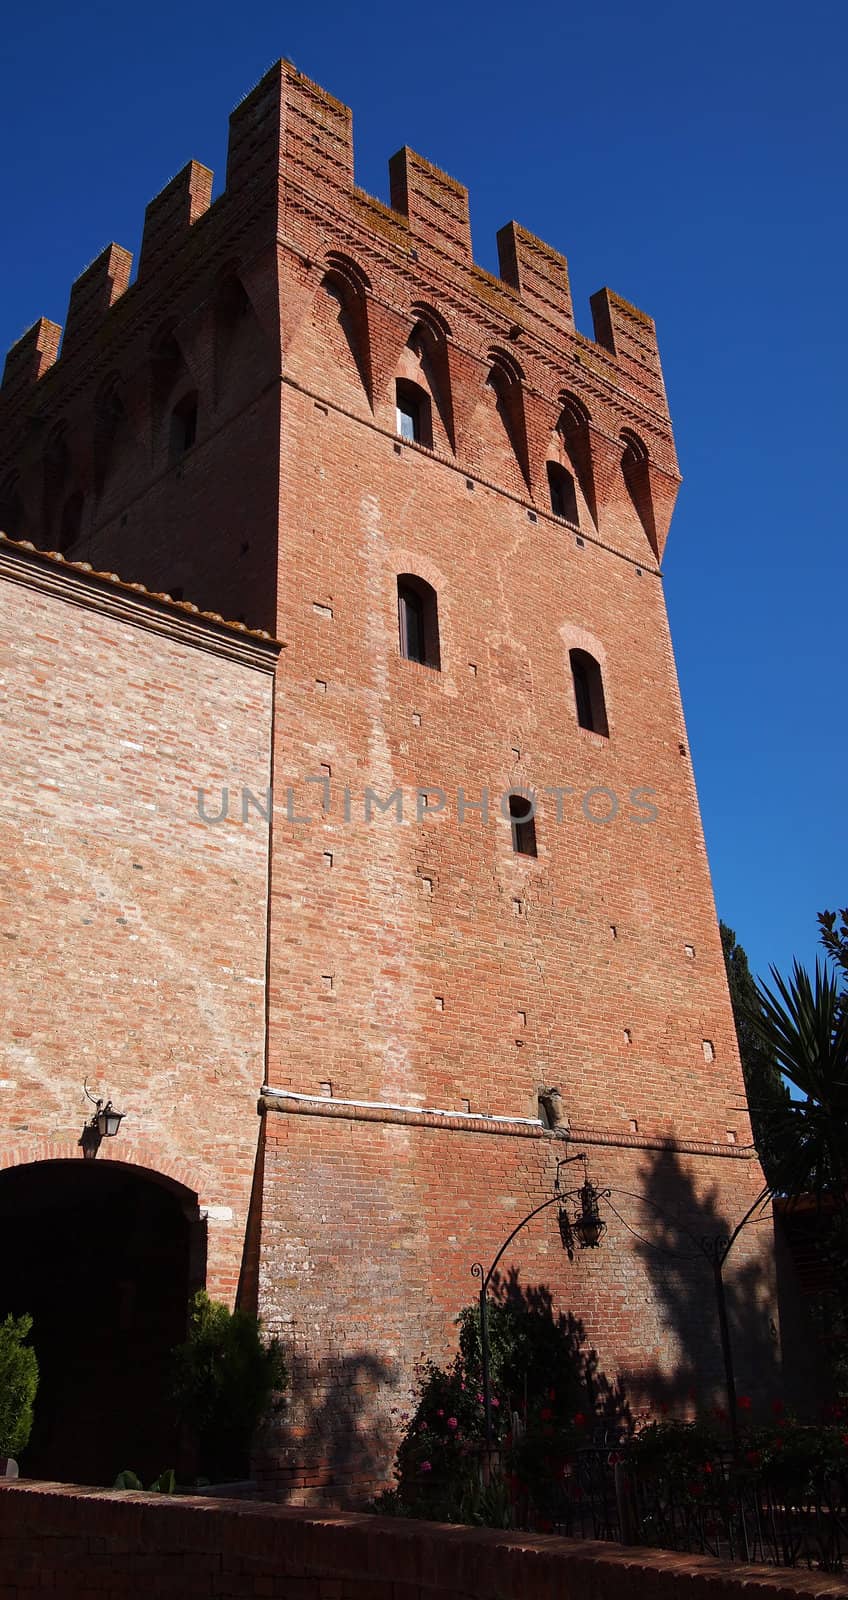 Castle from red bricks in Tuscany near Monte Oliveto Maggiore in Italy.